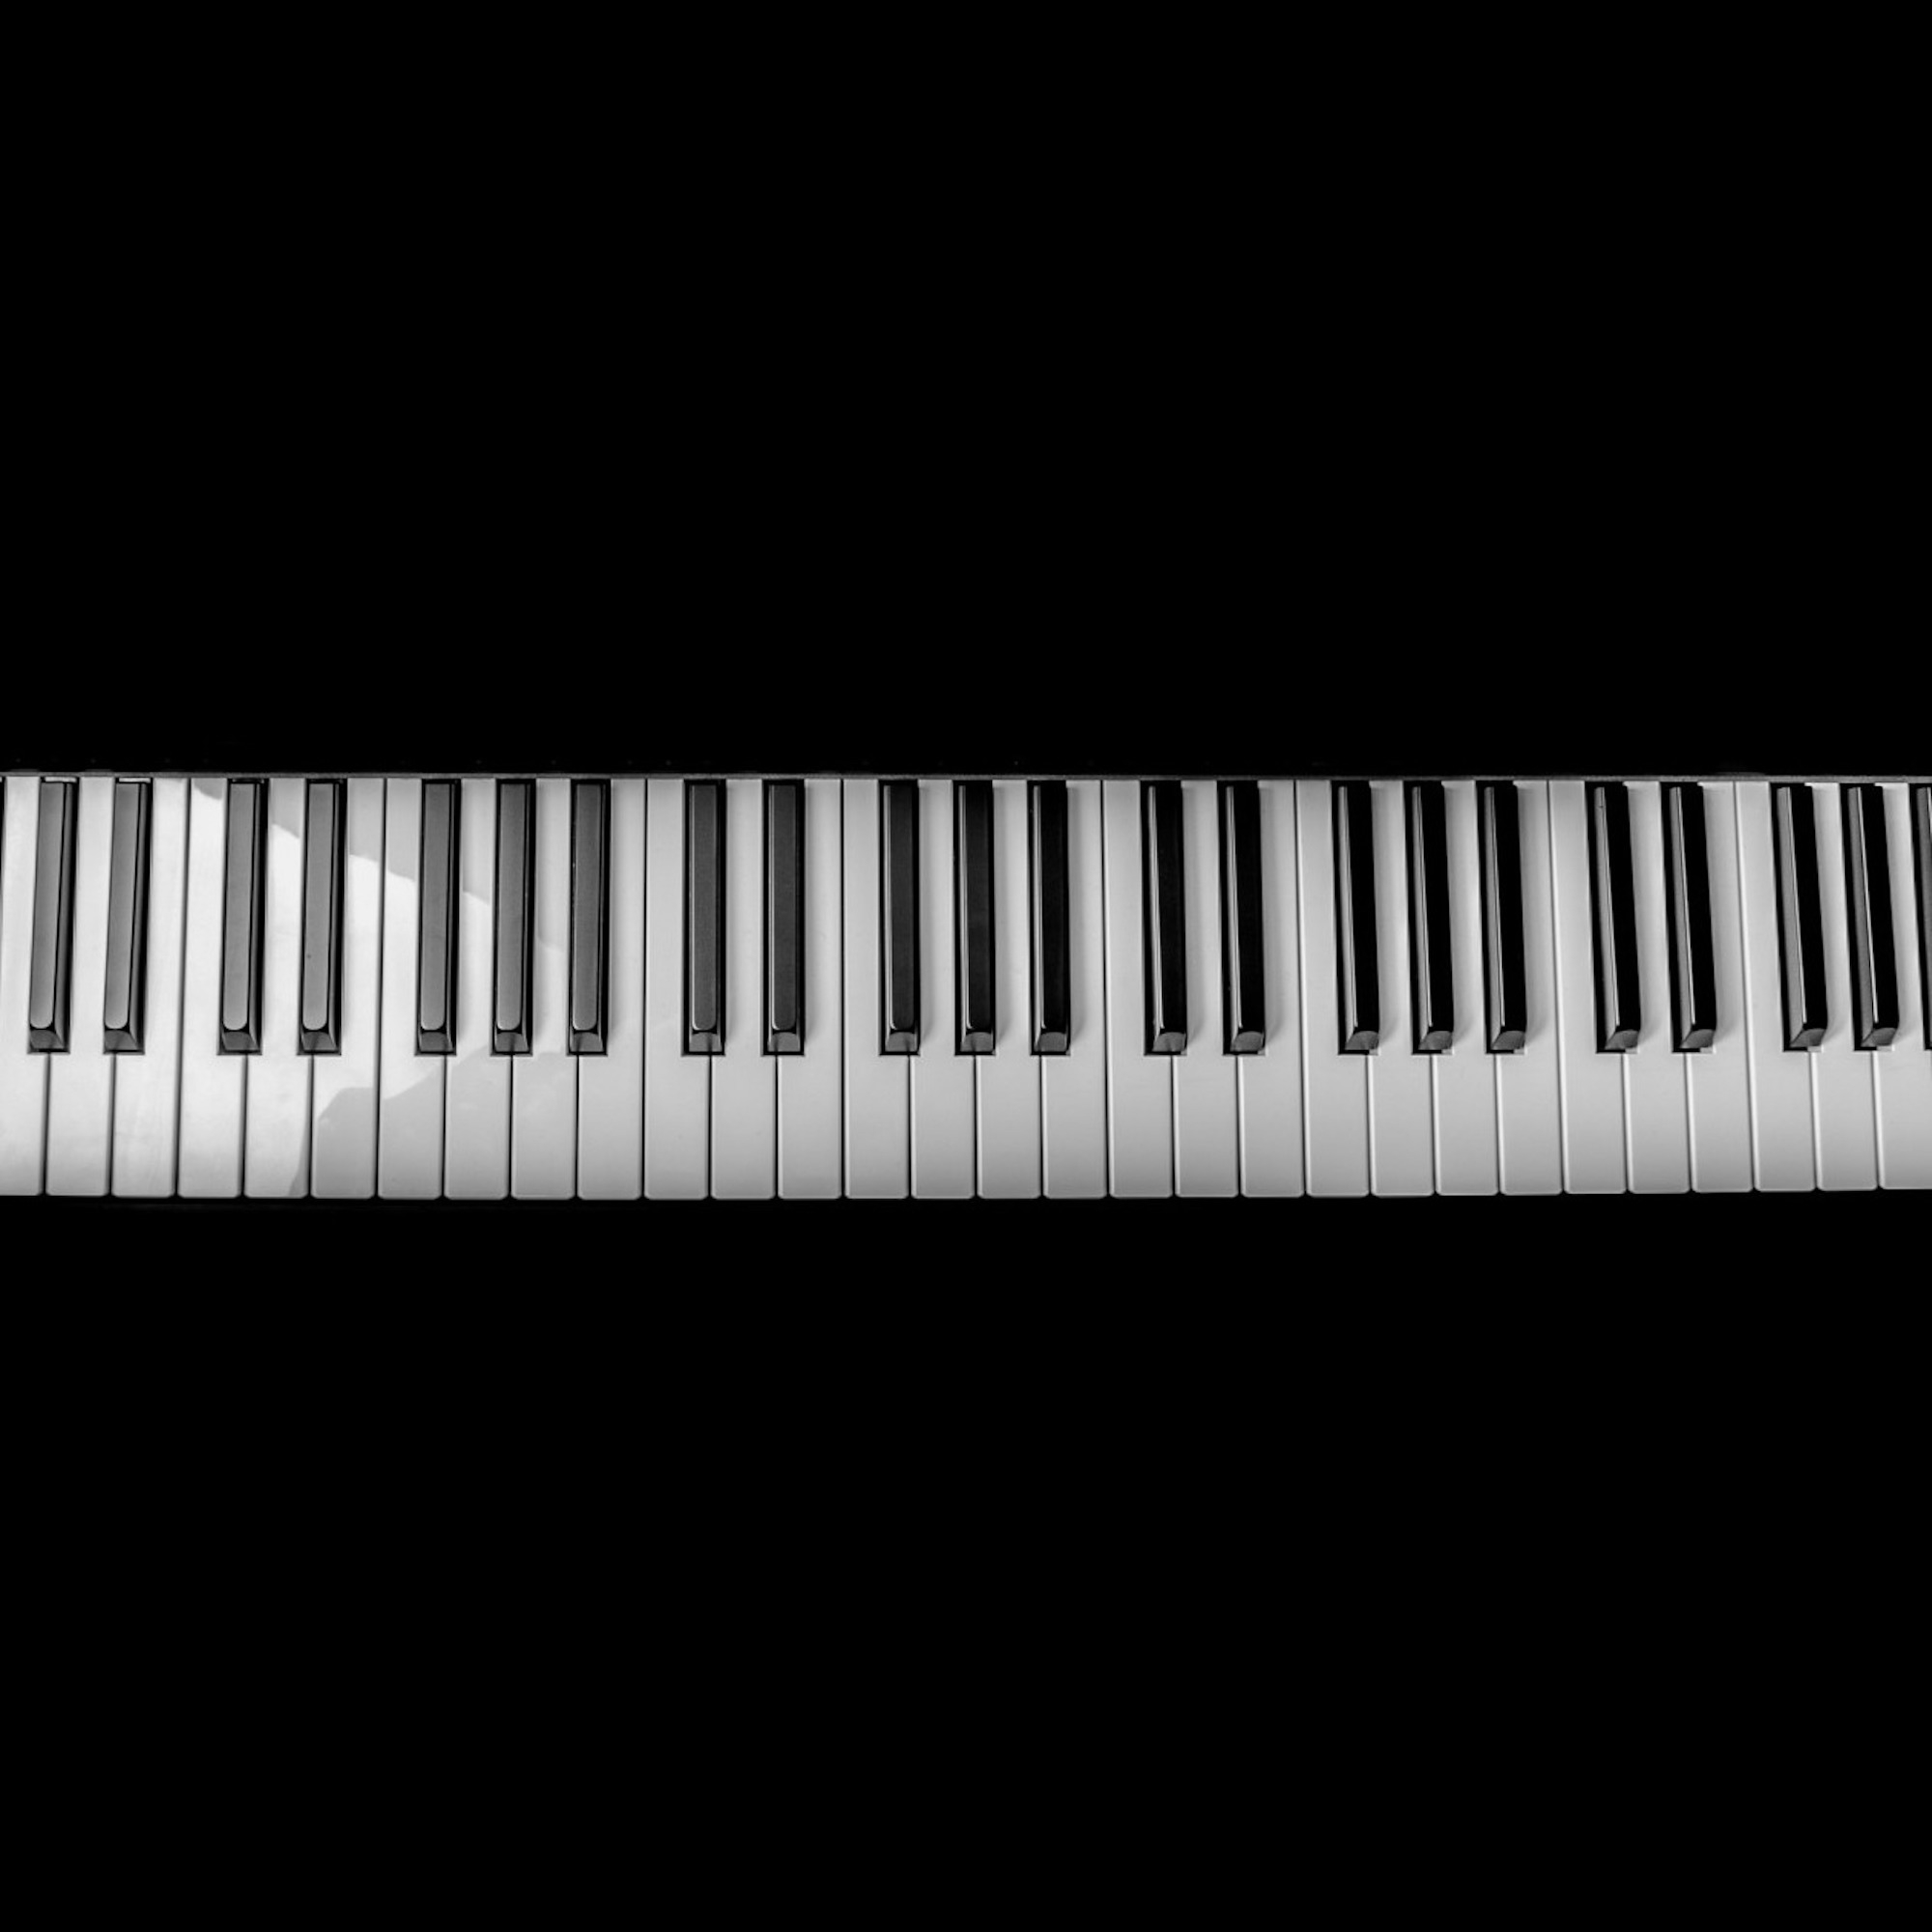 Passion & Romance - a 20 Track Piano Collection